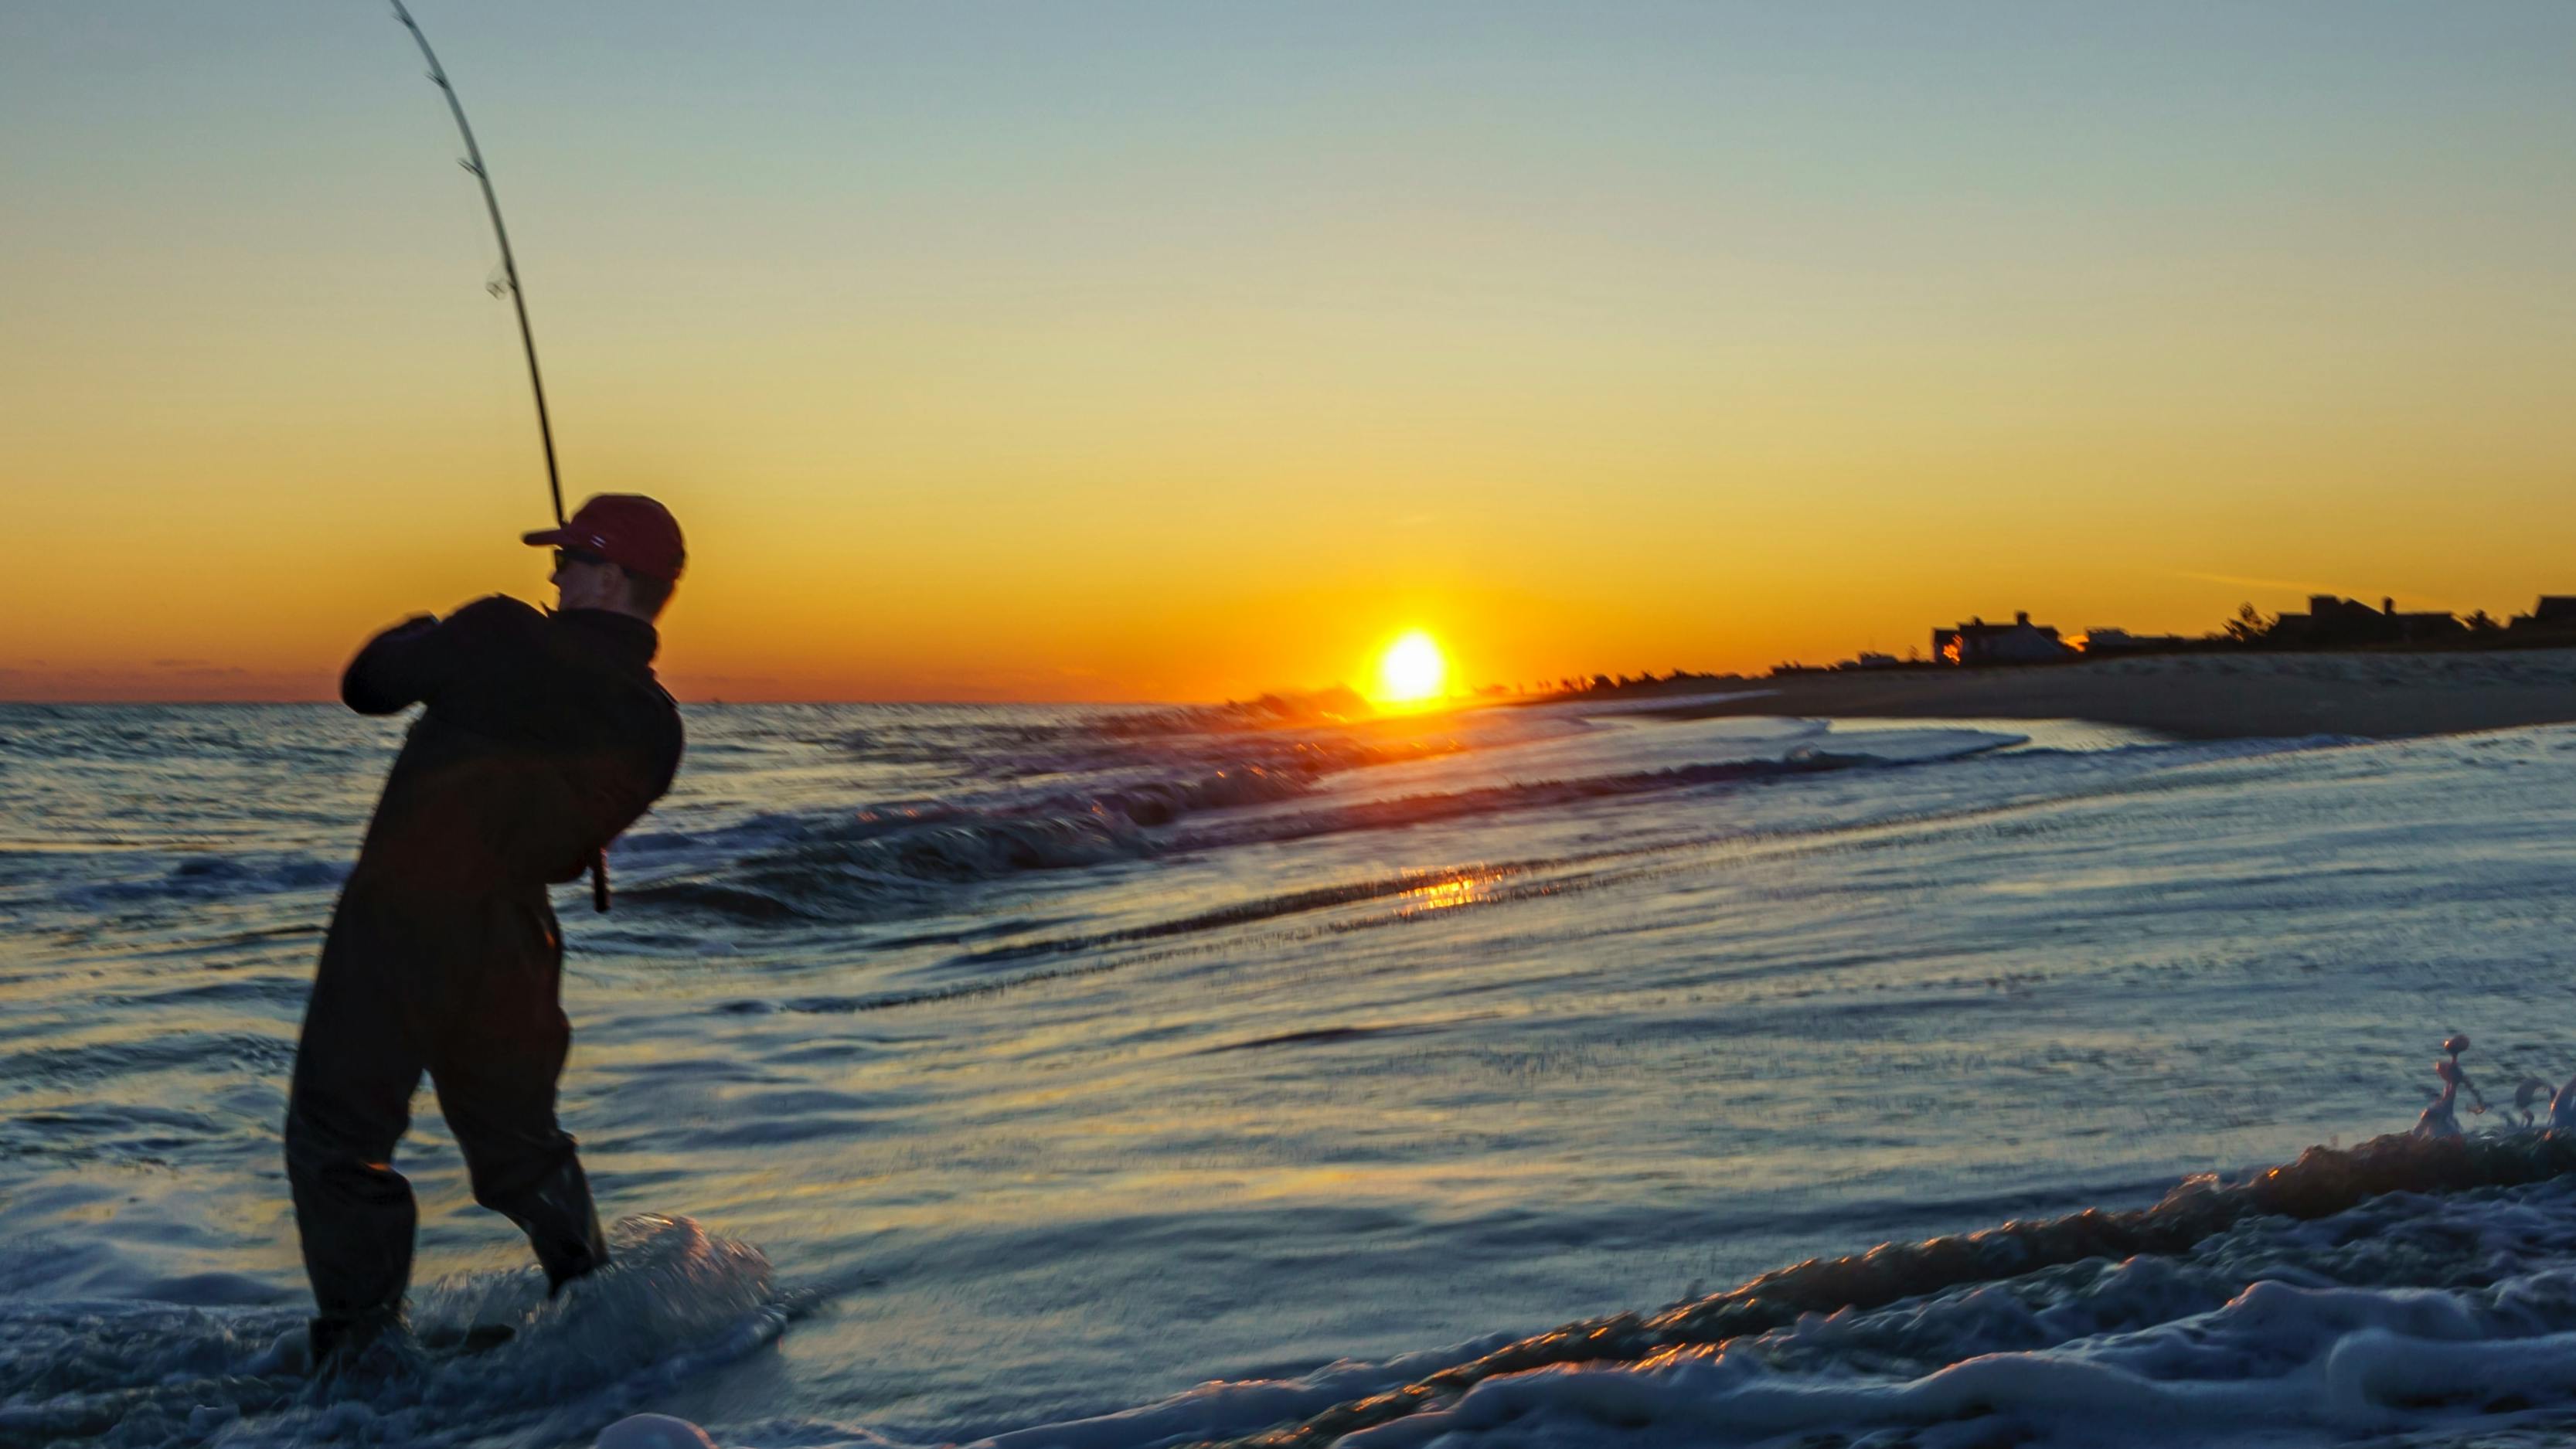 A man fishing in an ocean as the sun sets. 